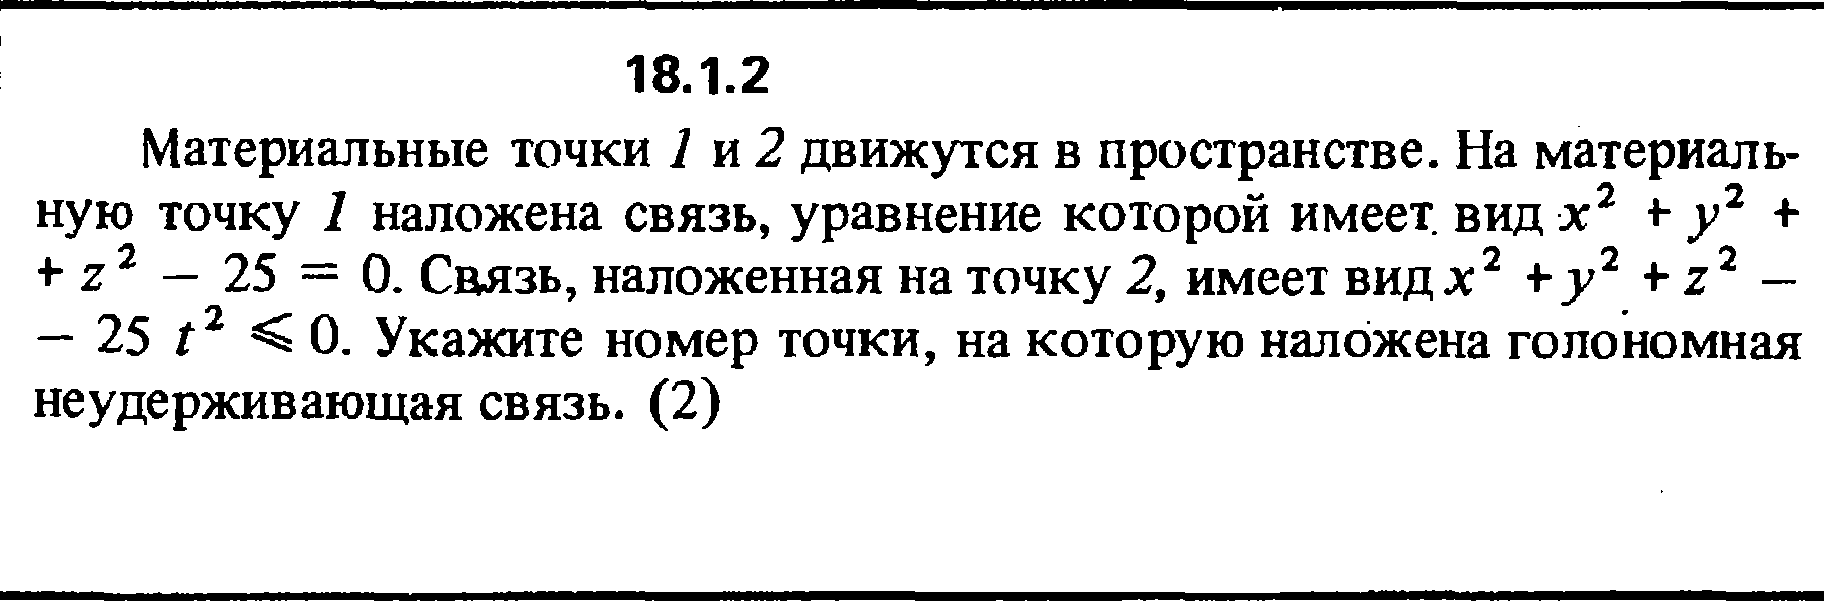 Решение 18.1.2 из сборника (решебника) Кепе О.Е. 1989